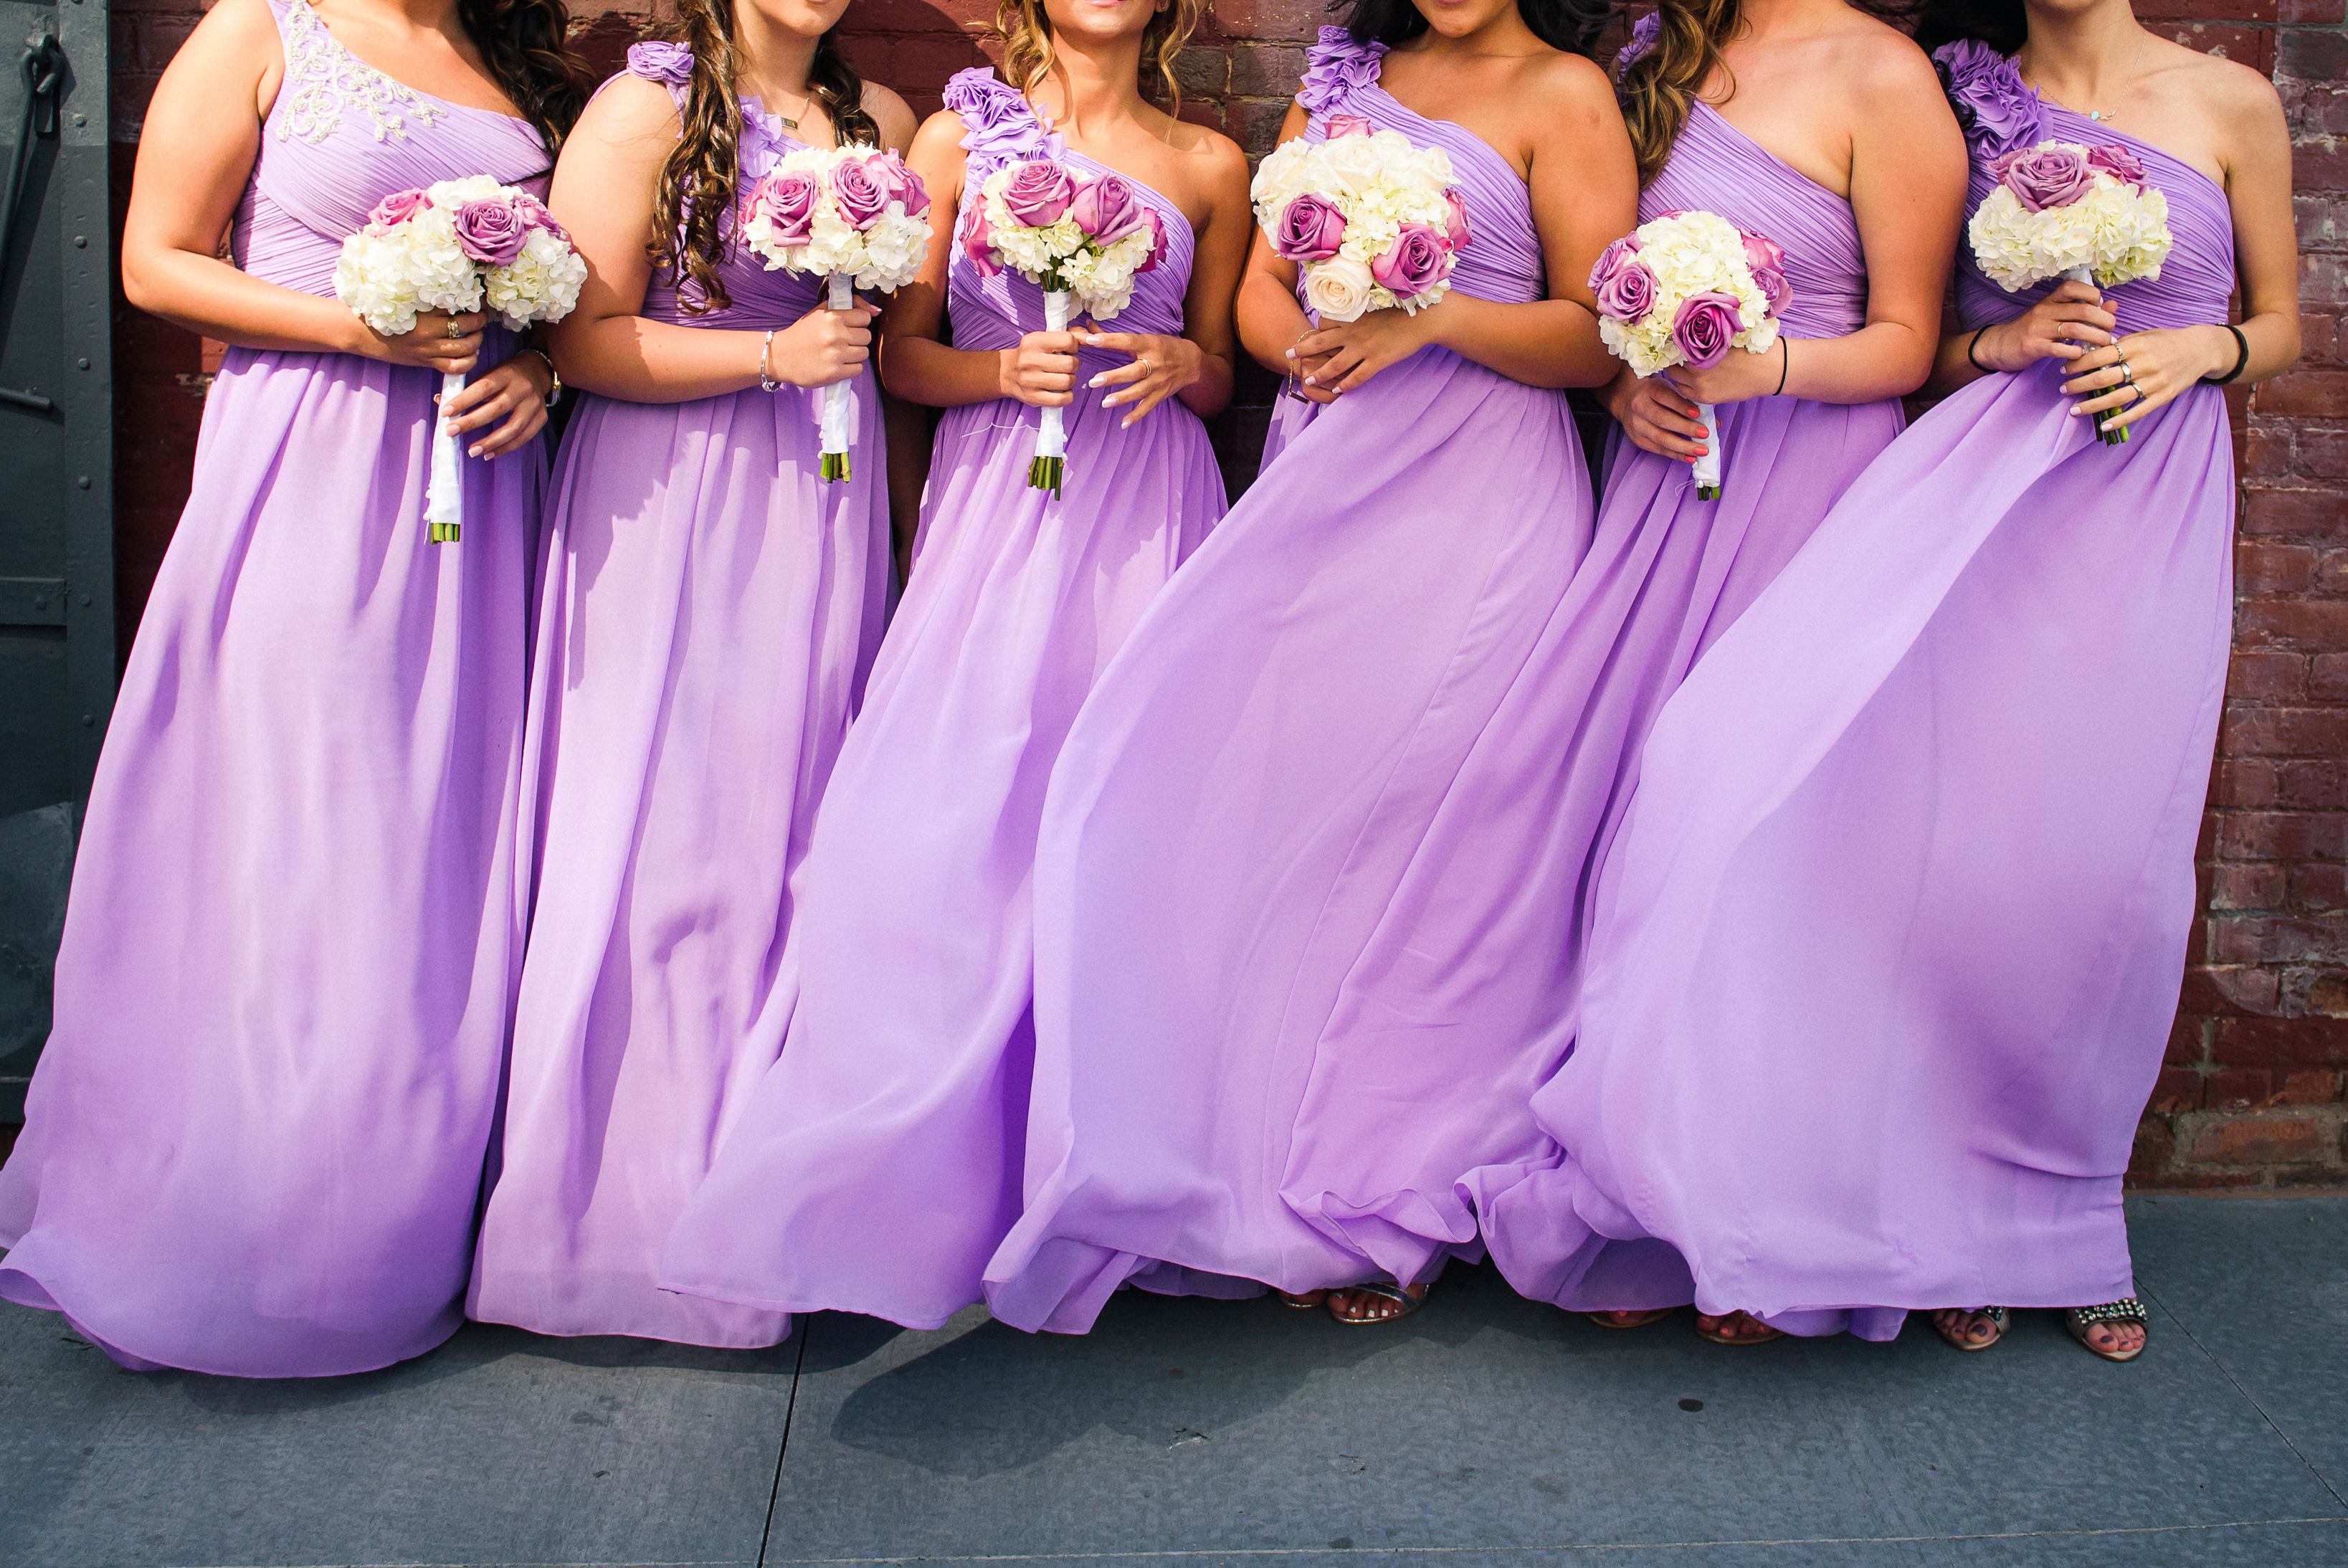 Tips on Picking Bridesmaids